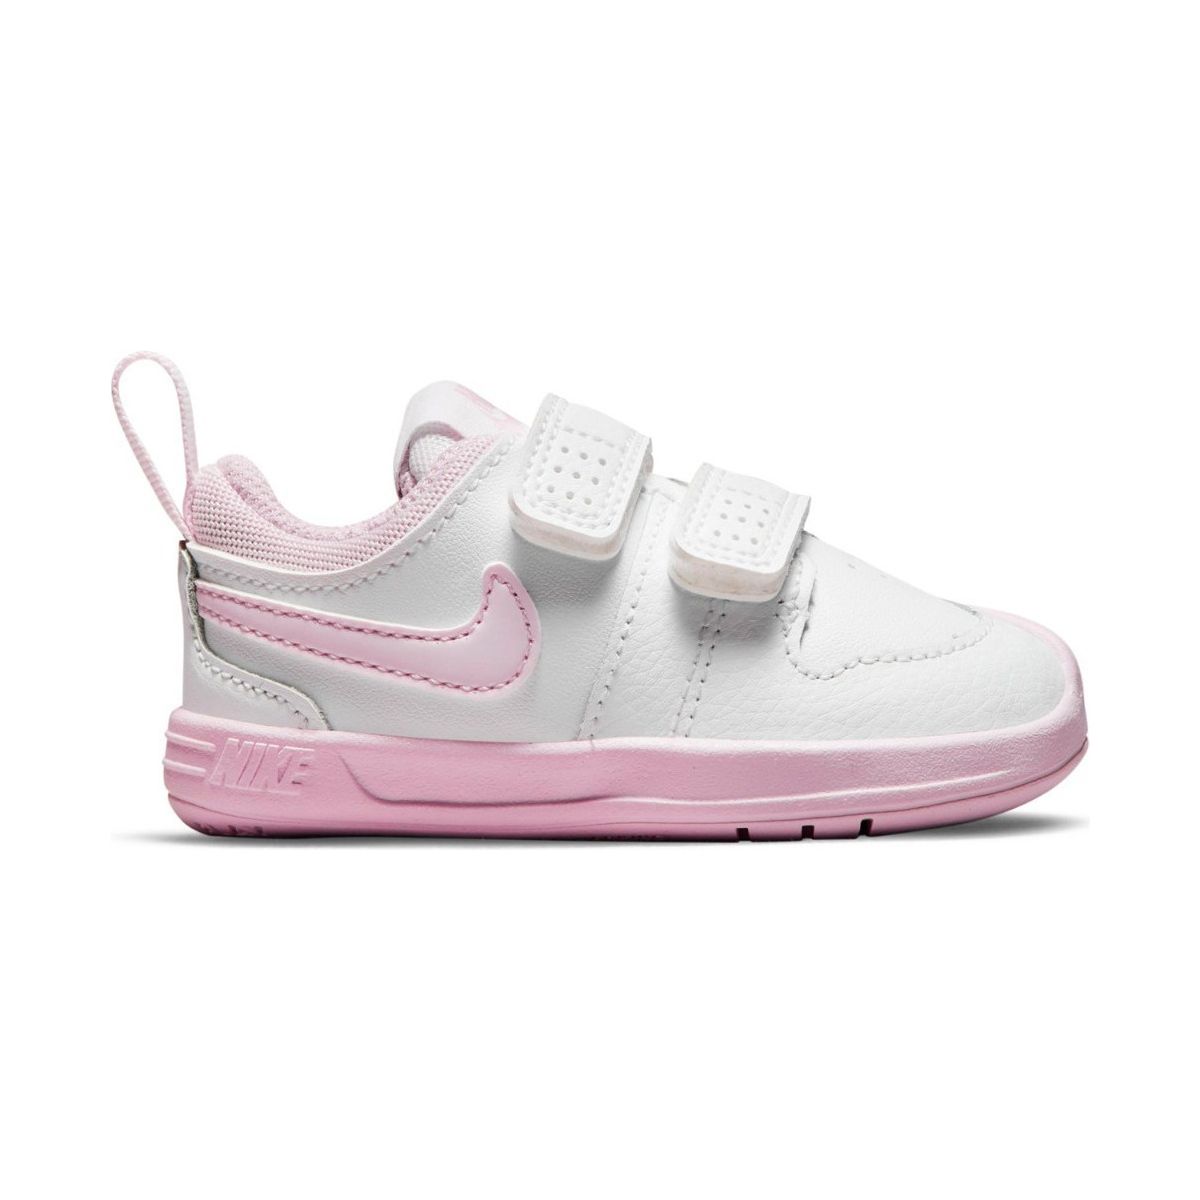 Pico 5 Toddler Shoes AR4162-105